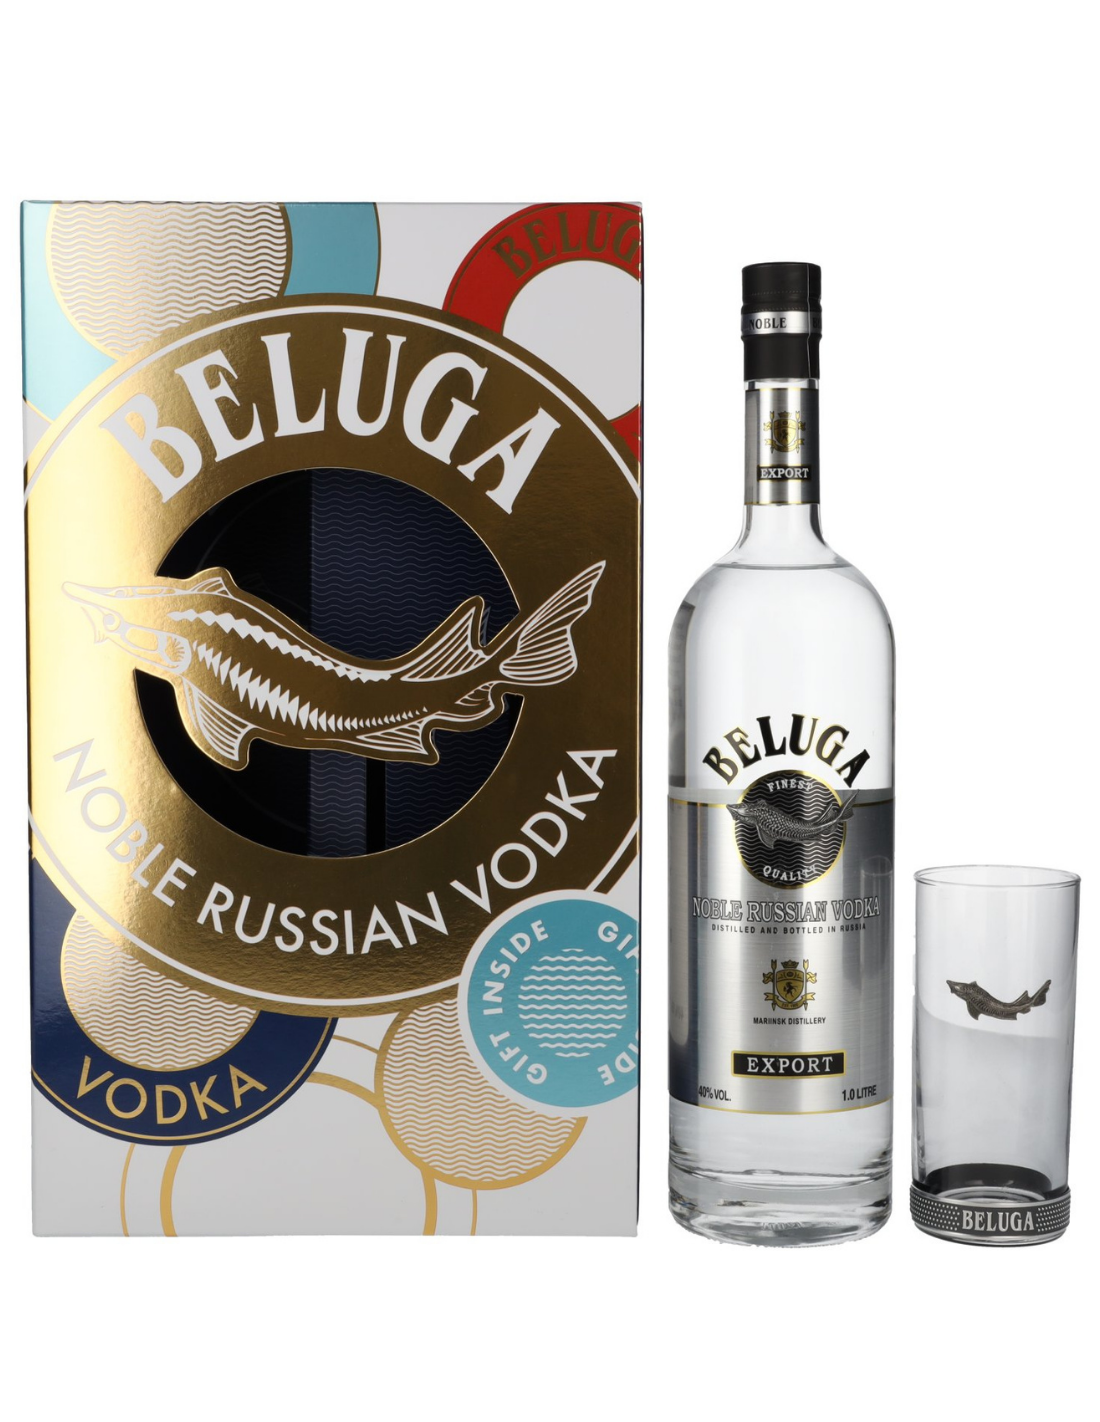 Vodca Beluga Noble + Pahar Highball, 1L, 40% alc., Rusia alcooldiscount.ro